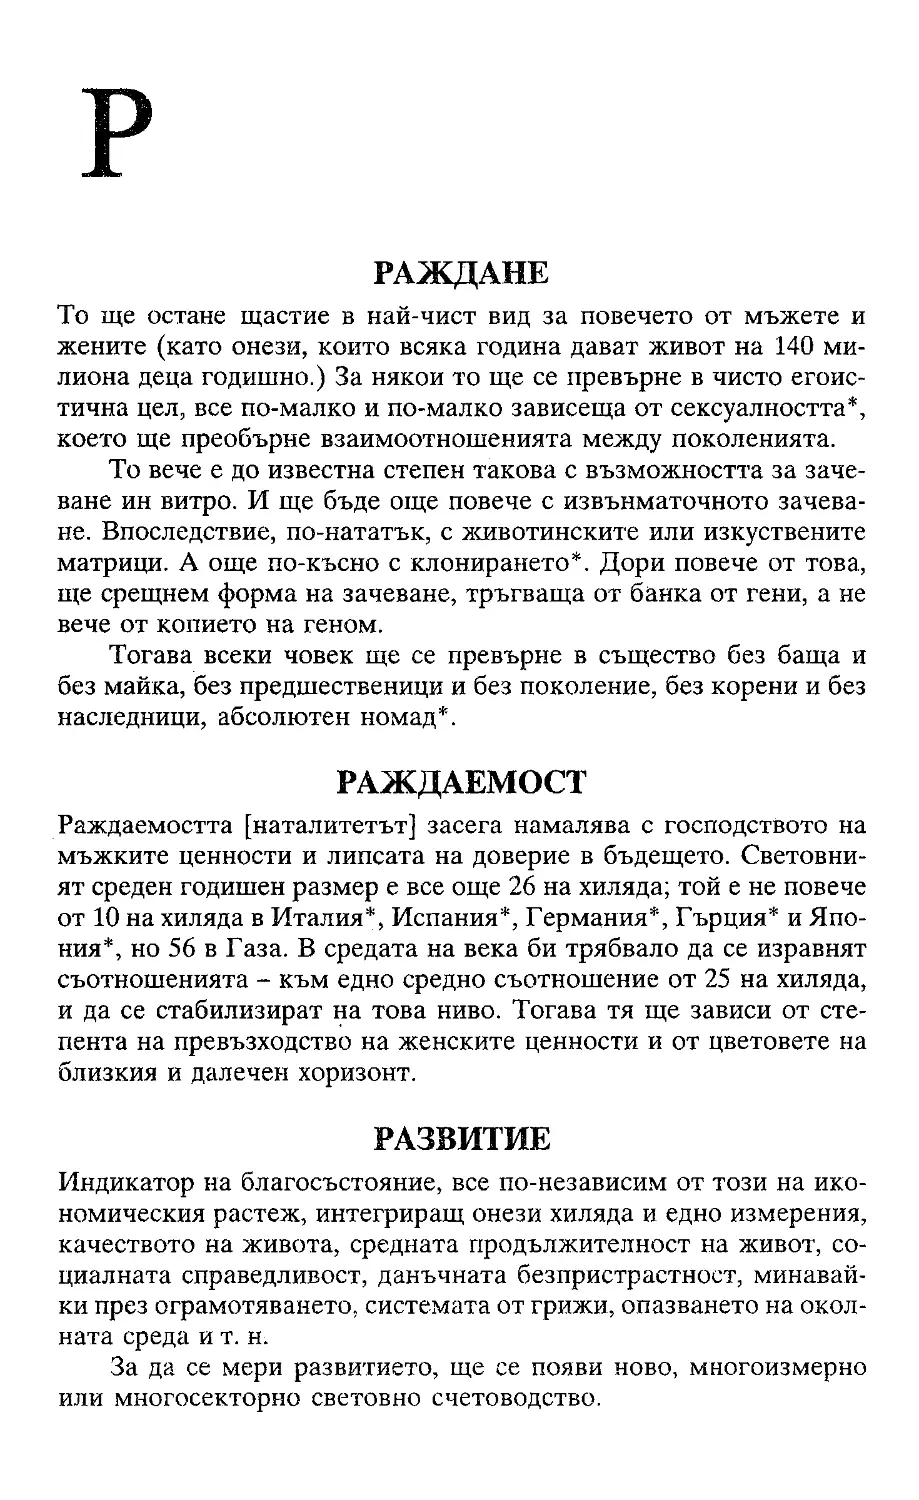 ﻿Жак Атали. Речник на 21 век_Page_096_Image_0001_1